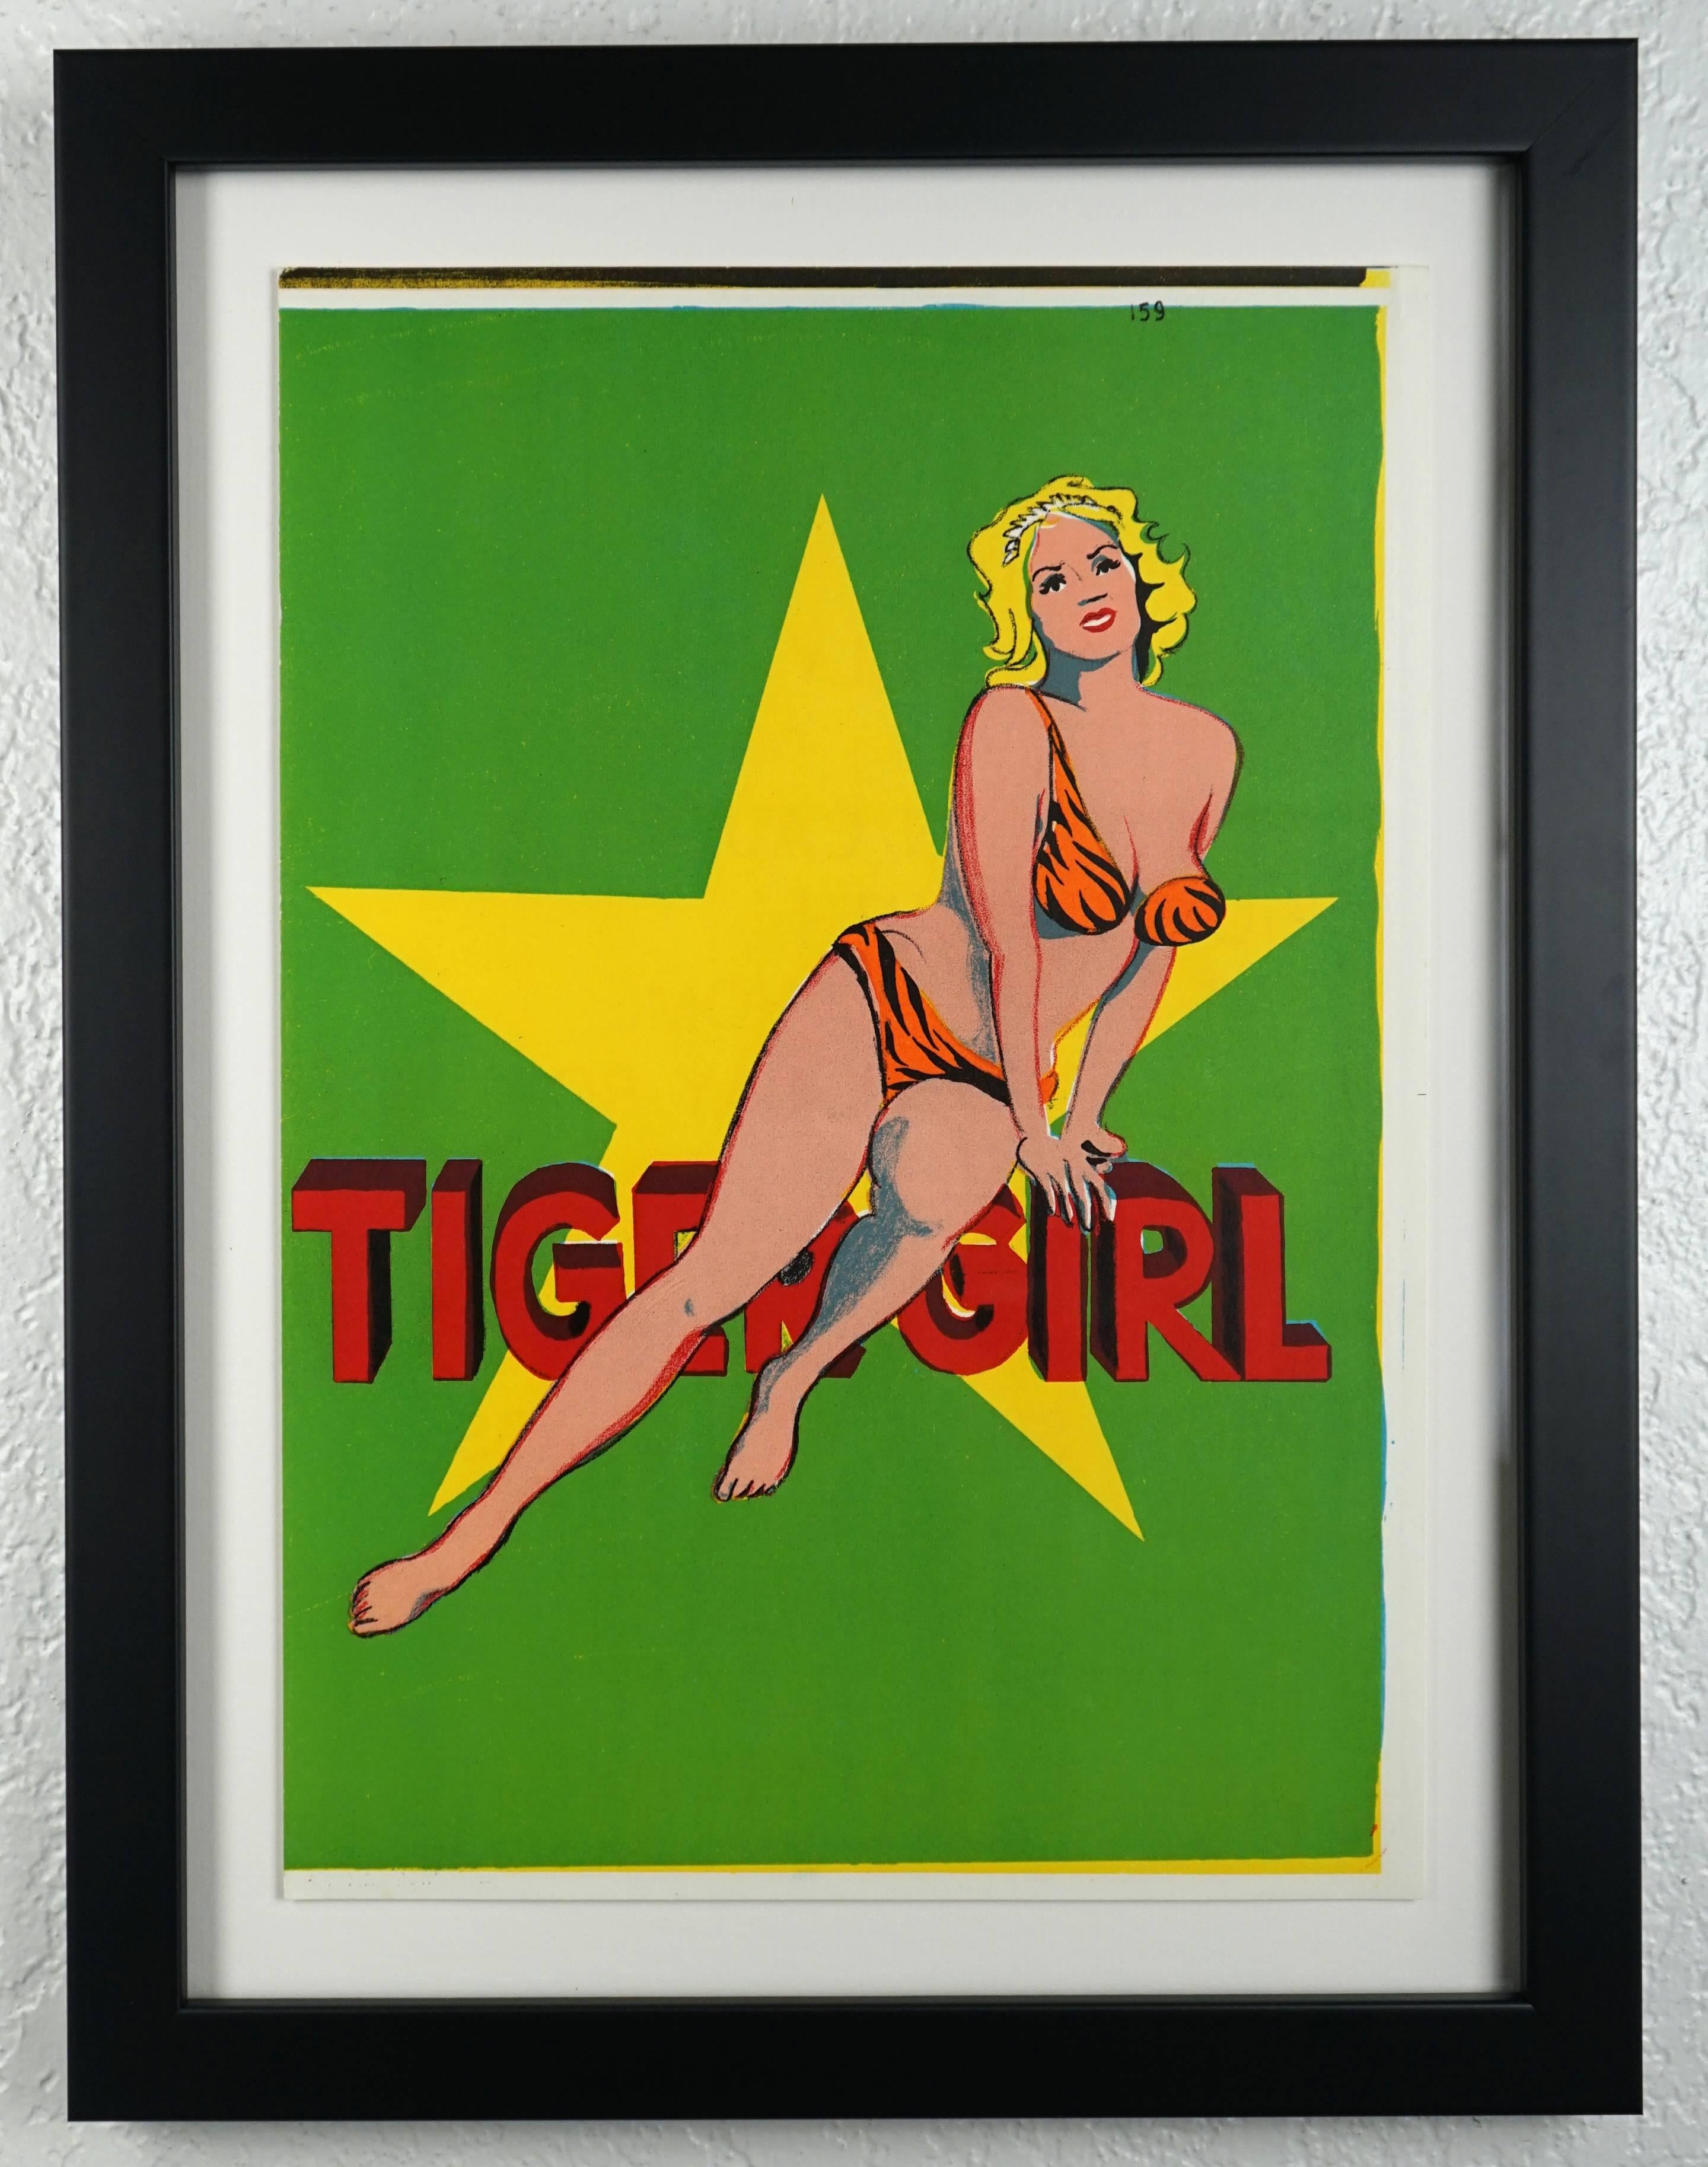 Tiger Girl - Print by Mel Ramos